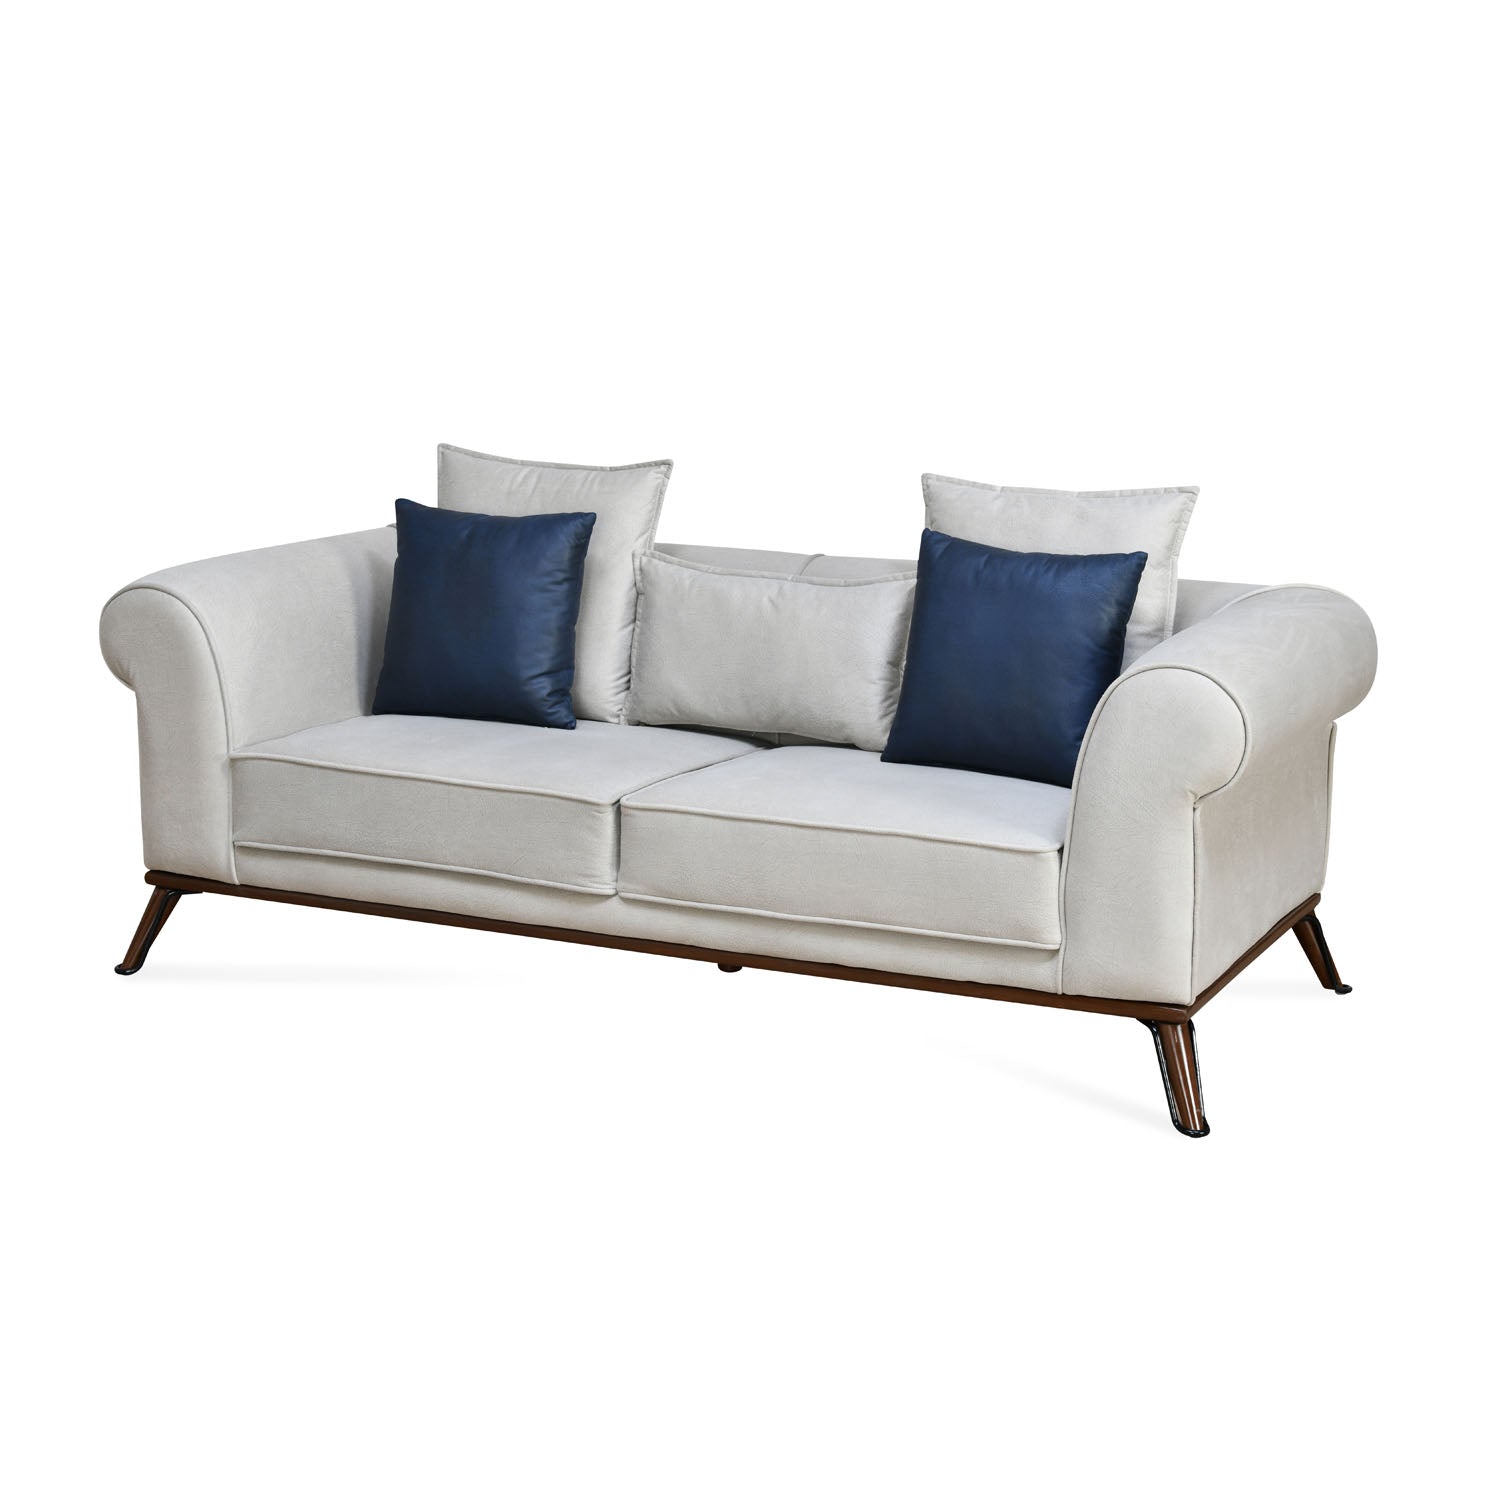 Clovis 2 Seater Fabric Sofa with Add on Cushions (Beige)